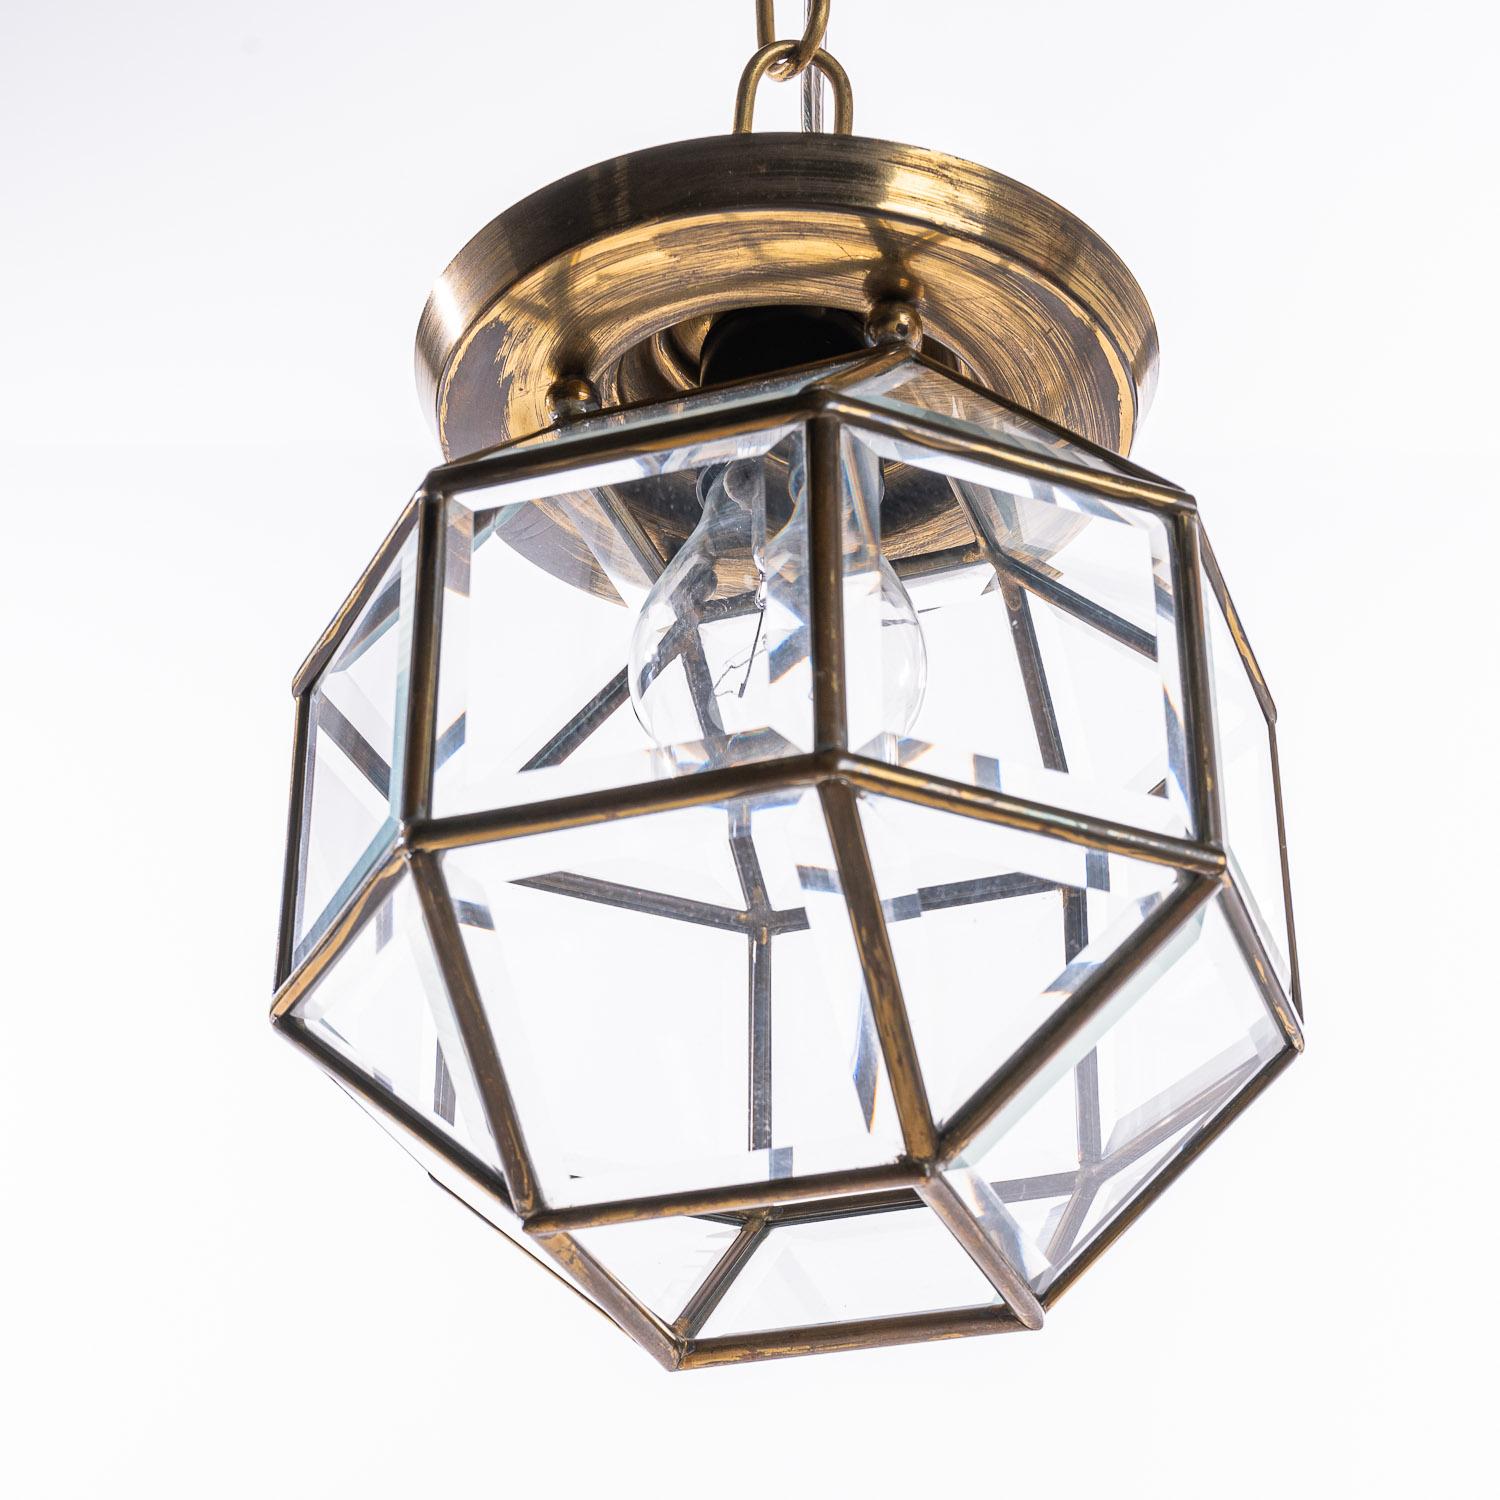 1900-1920 Brass & Glass Amsterdam School Lantern For Sale 1